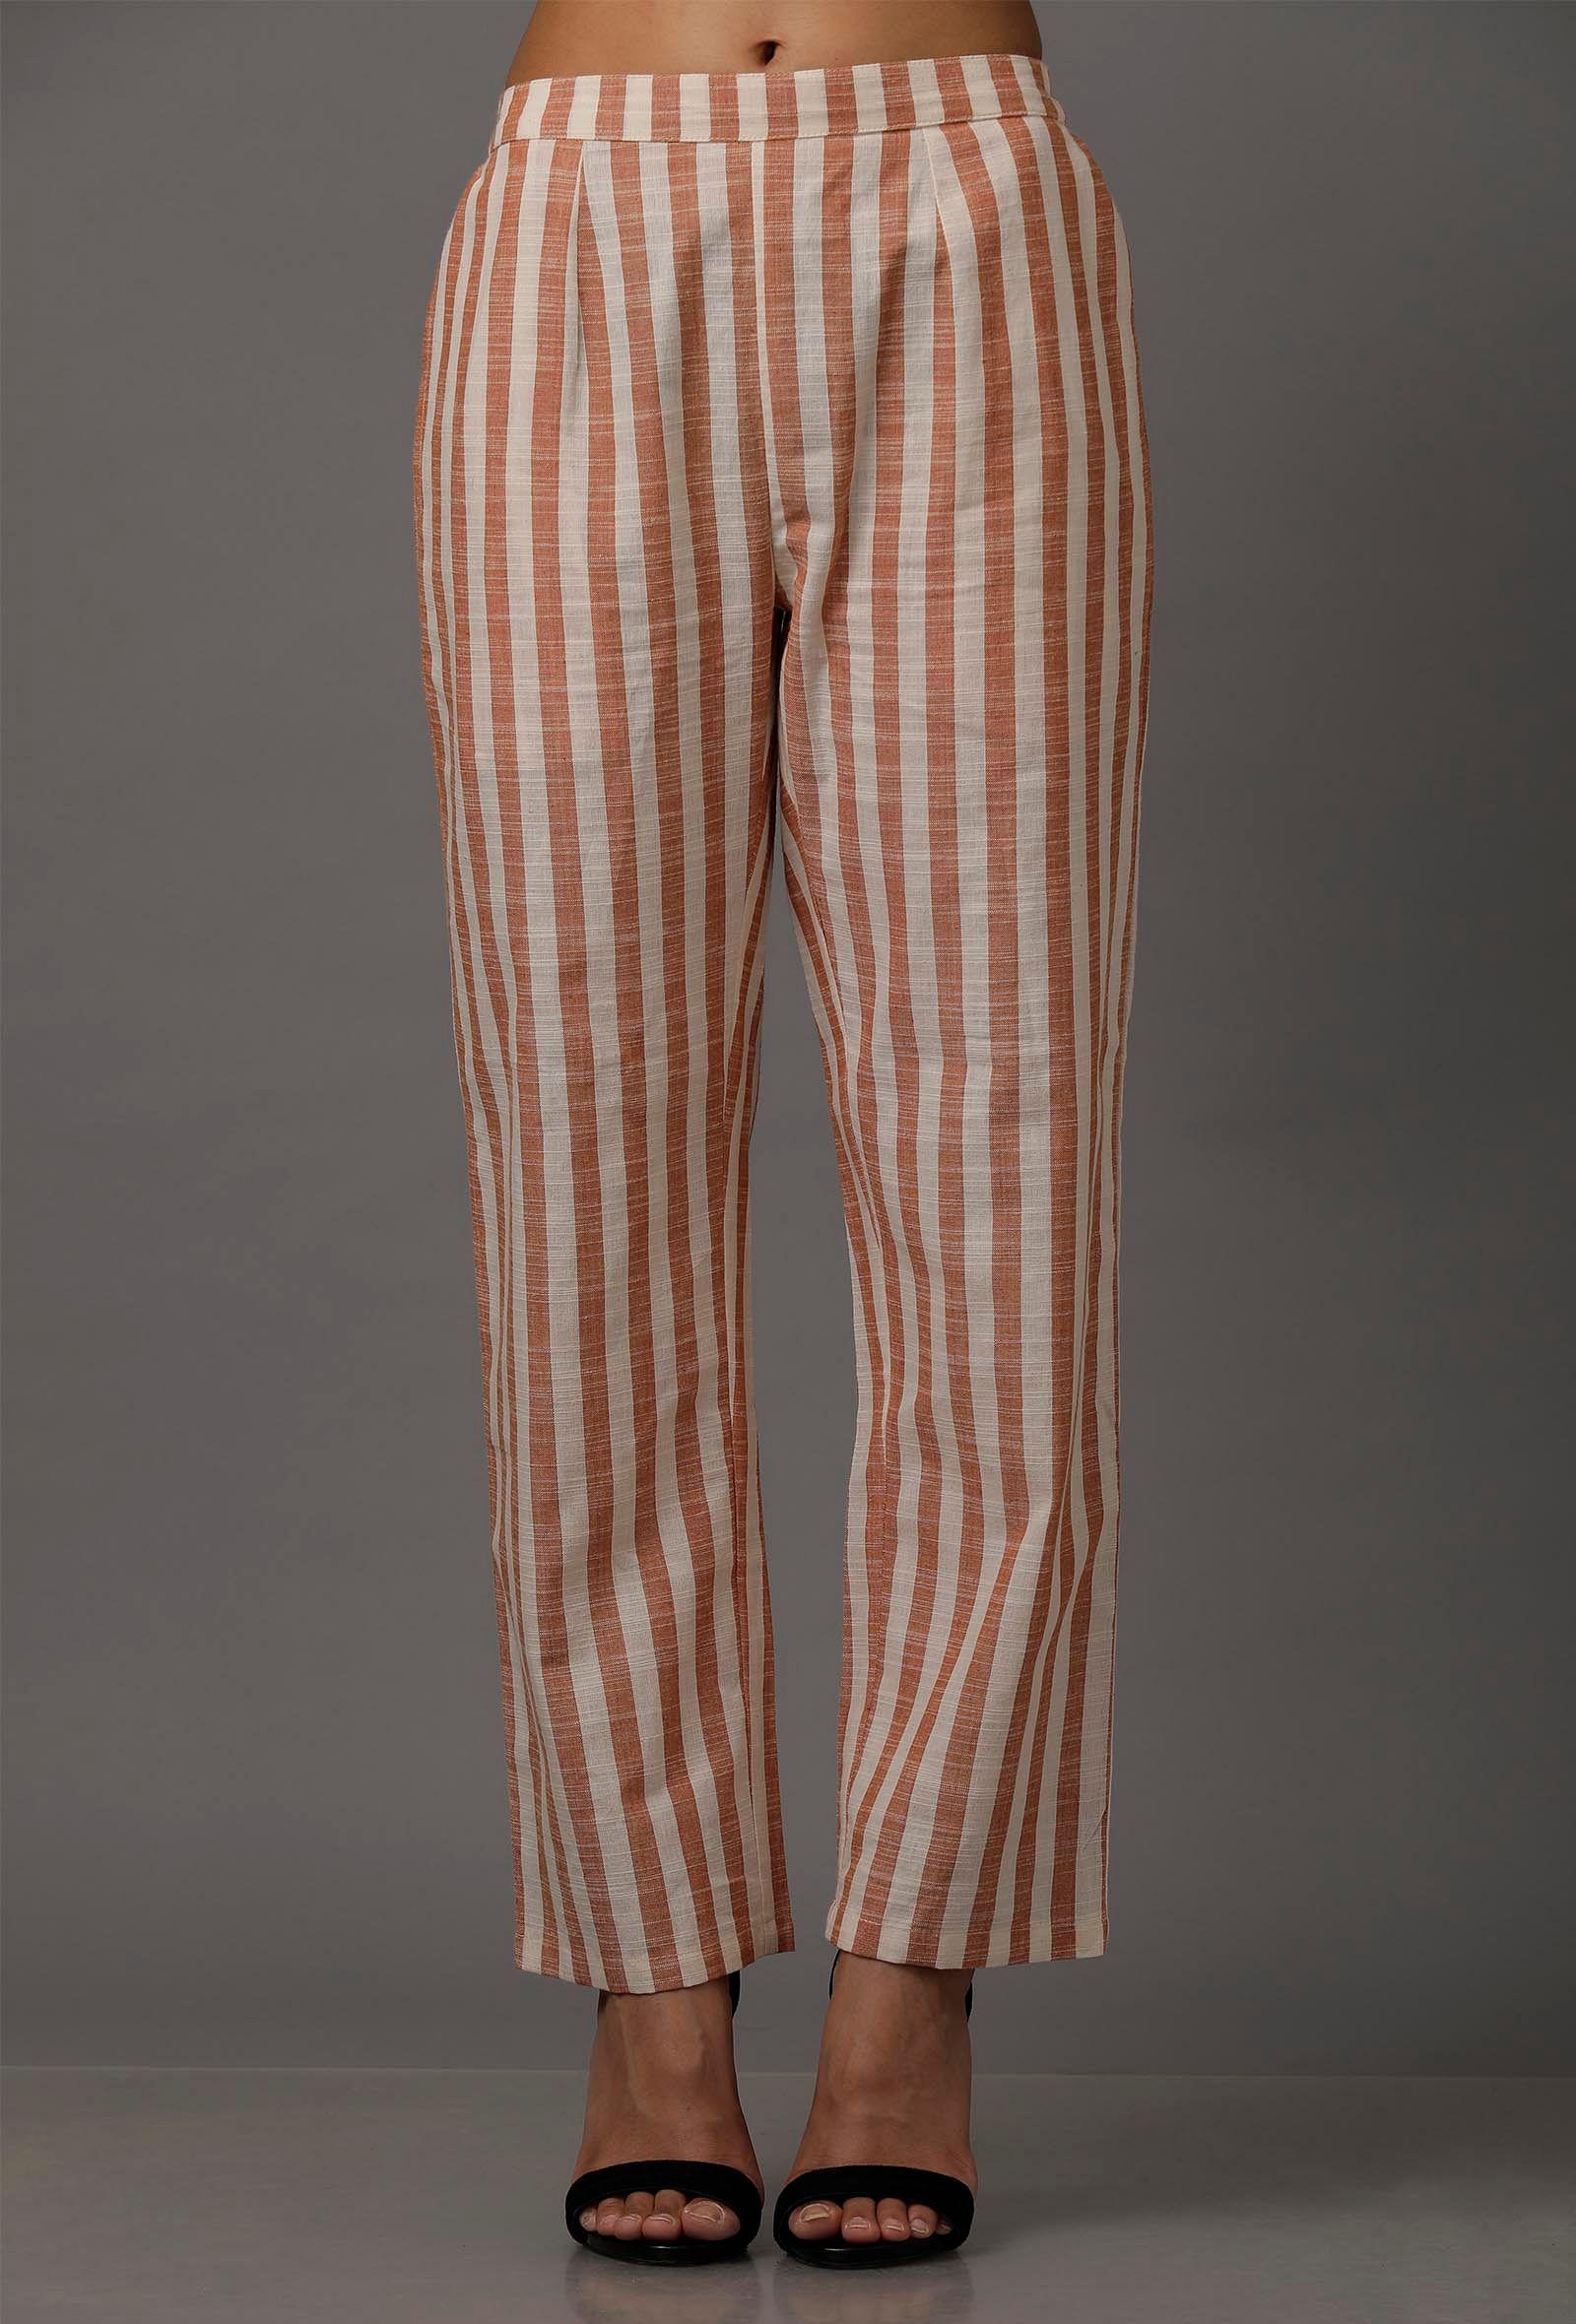 Orange and White Stripes Pure Woven Cotton Pants